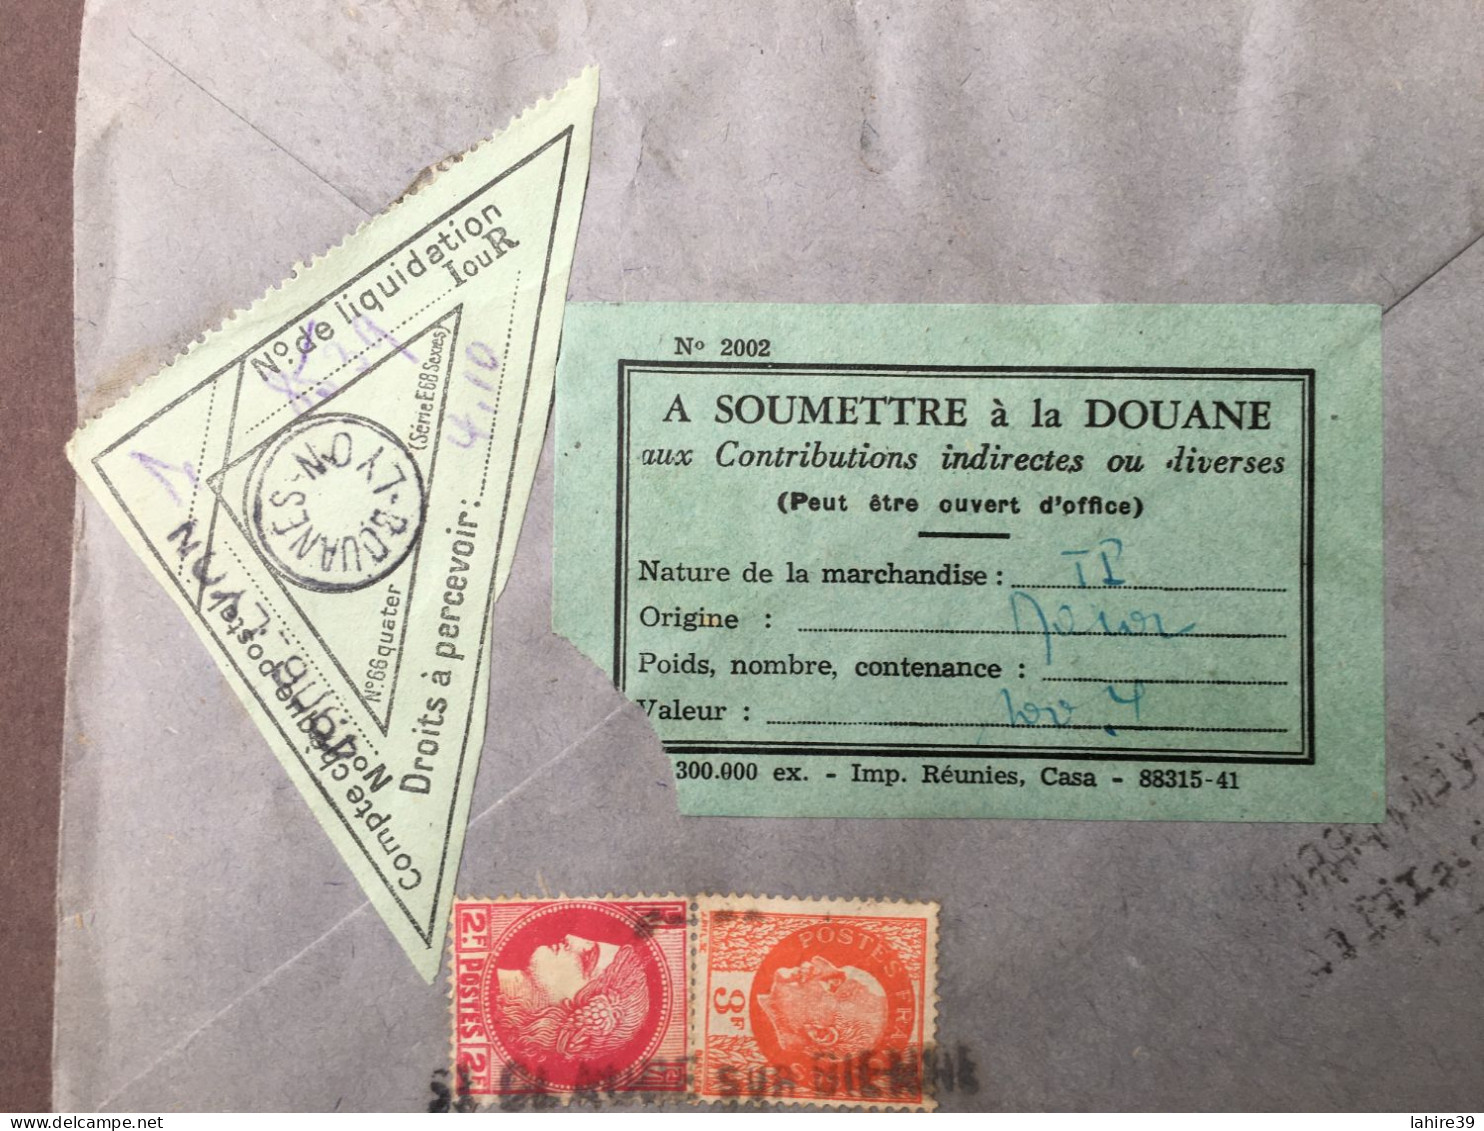 Enveloppe timbrée / Recommandée / Rabat / Protectorat du Maroc / Douanes / Taxes